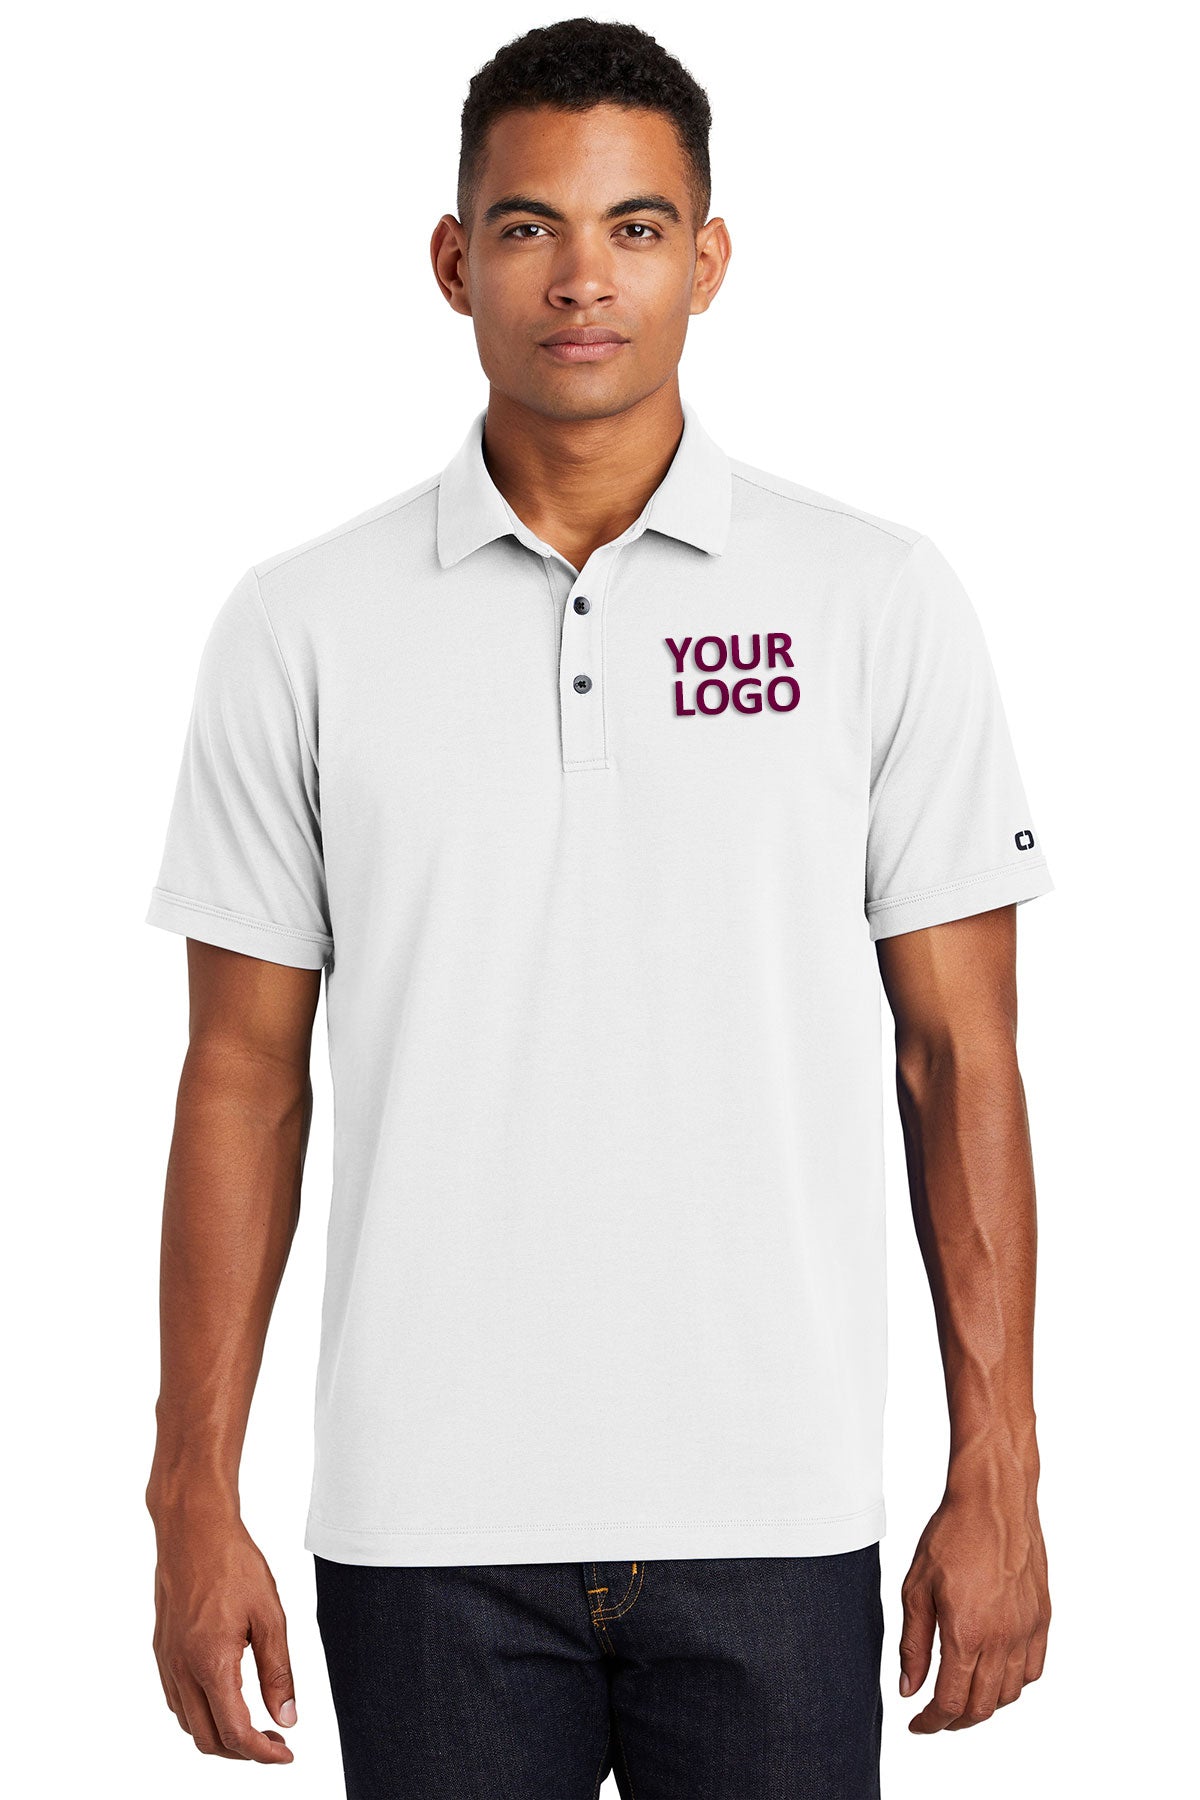 OGIO Bright White OG138 embroidered polo shirts custom